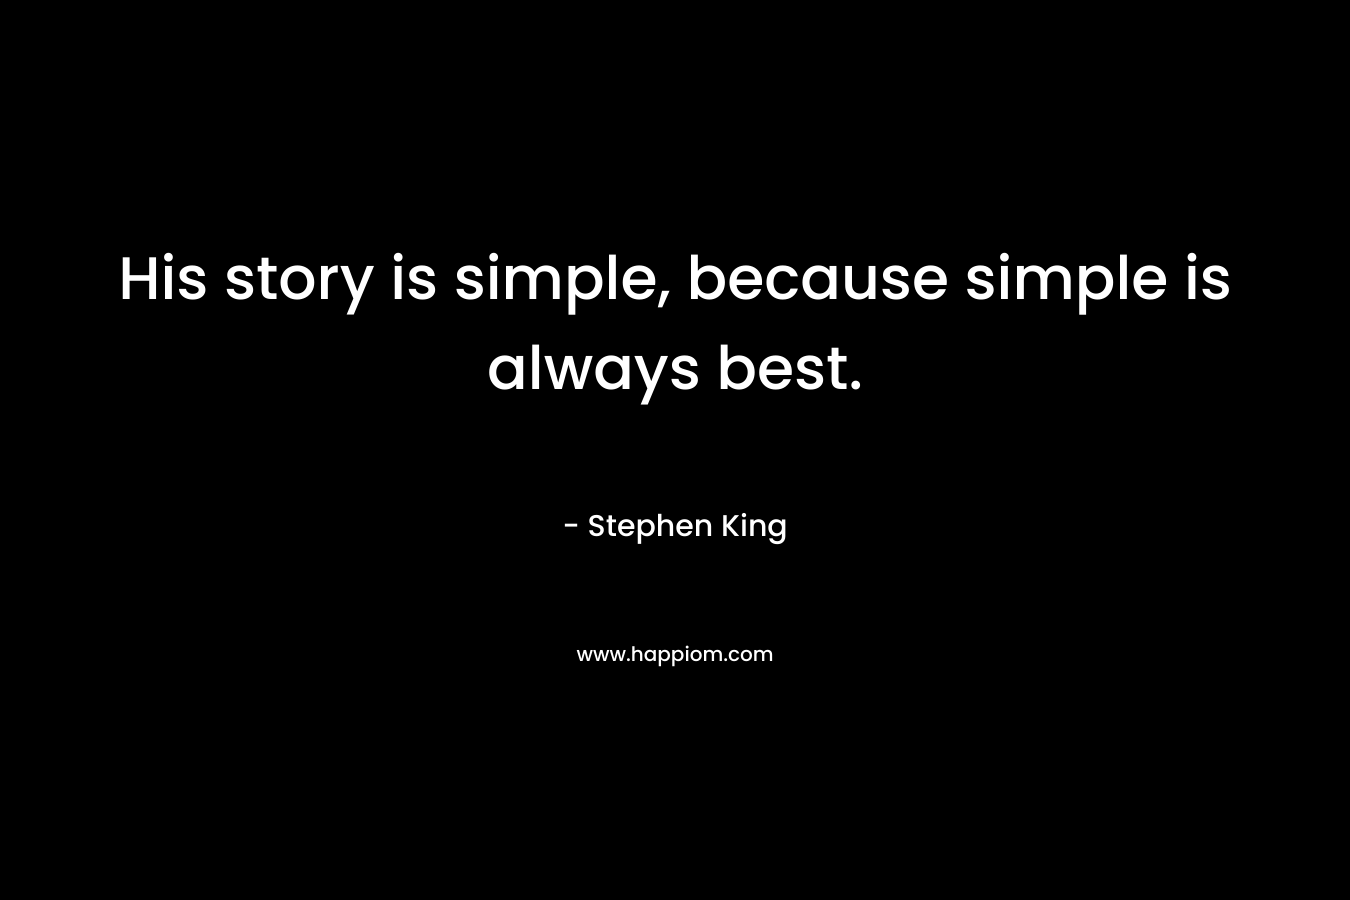 His story is simple, because simple is always best.